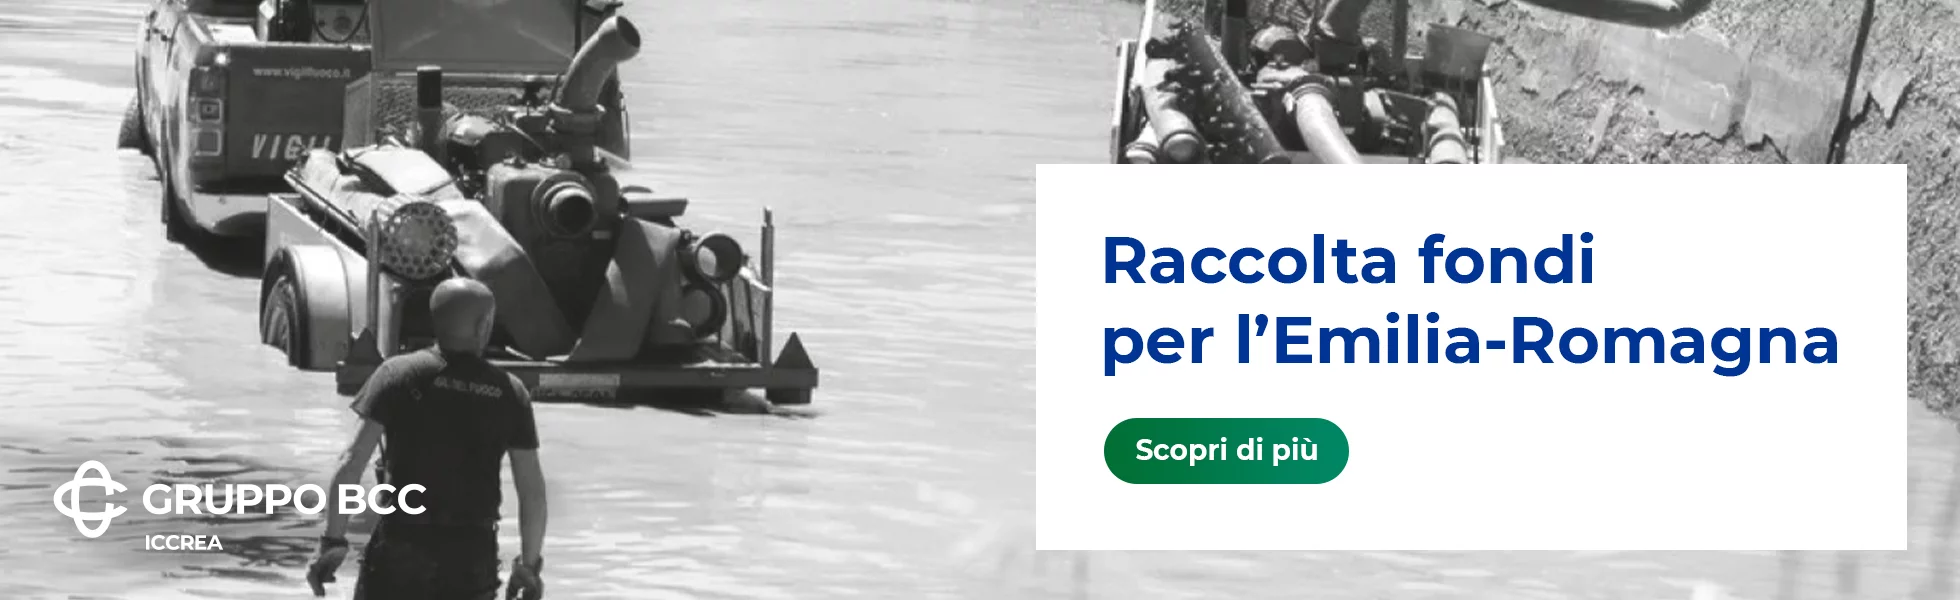 Raccolta Fondi per l'Emilia-Romagna